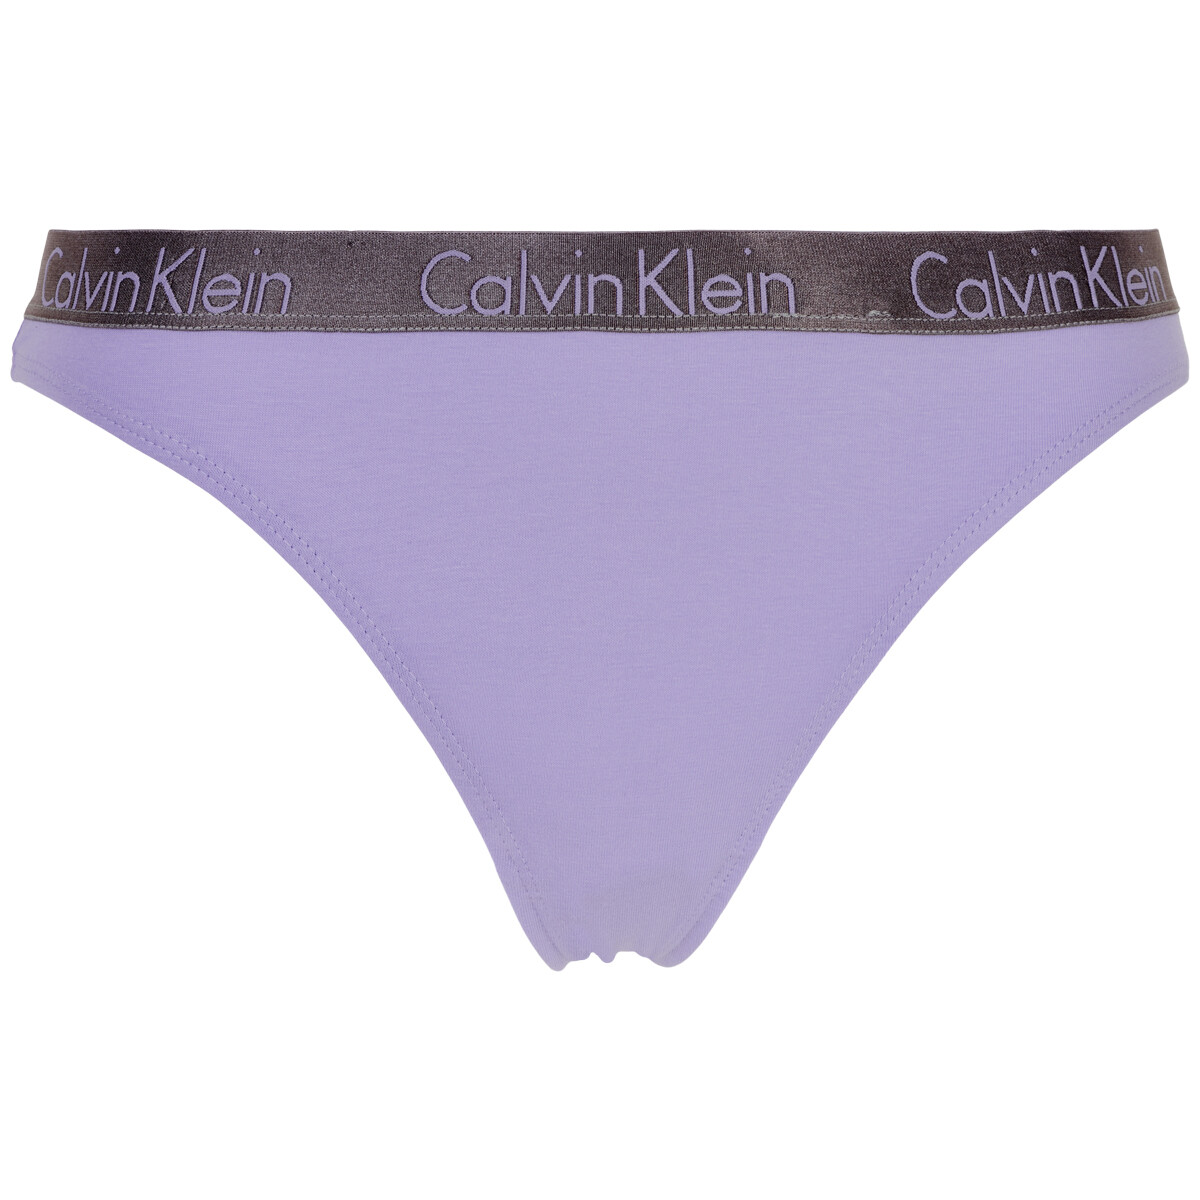 Calvin Klein Lingeri G-streng, Farve: Vervia, Størrelse: M, Dame